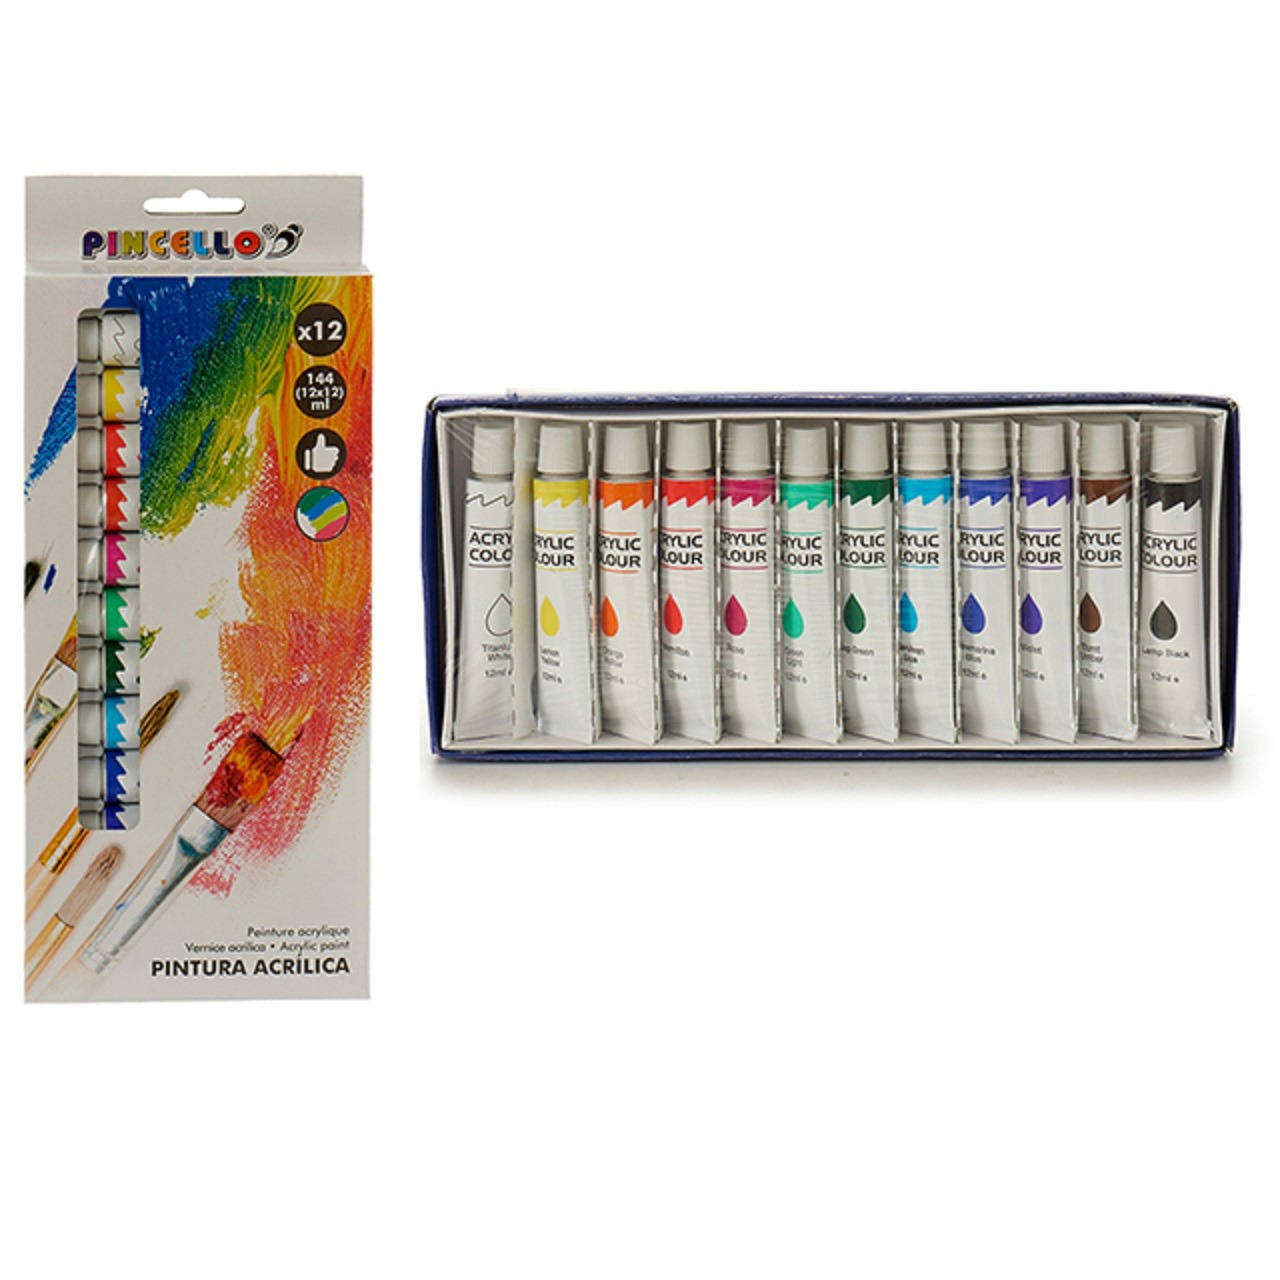 Acryl hobby-knutselen verf tubes 12 kleuren in tubes van 12 ml